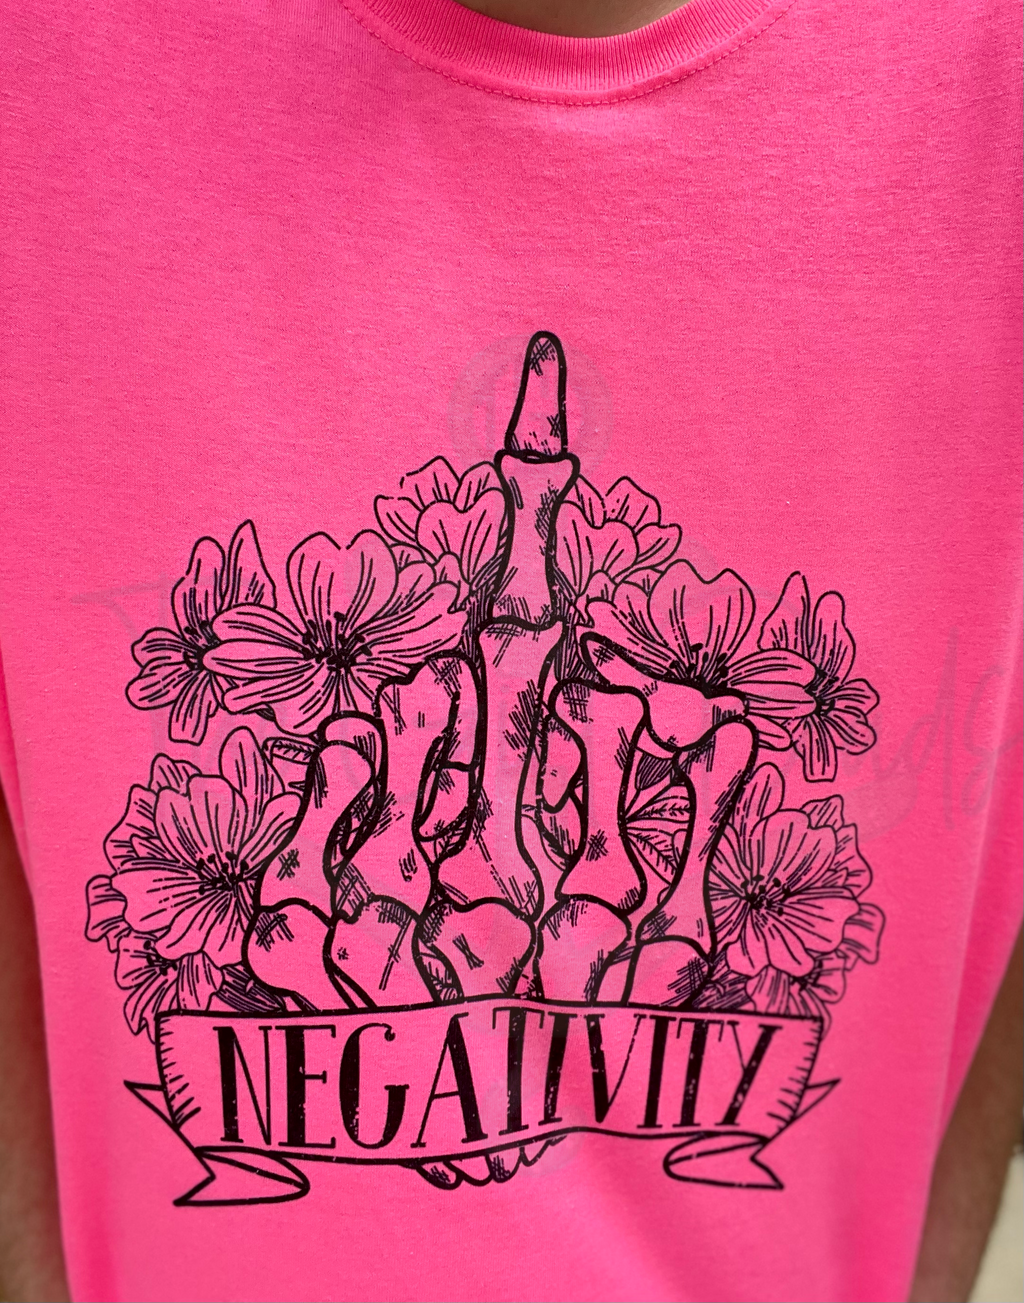 Fuck Negativity (All Black) Top Design